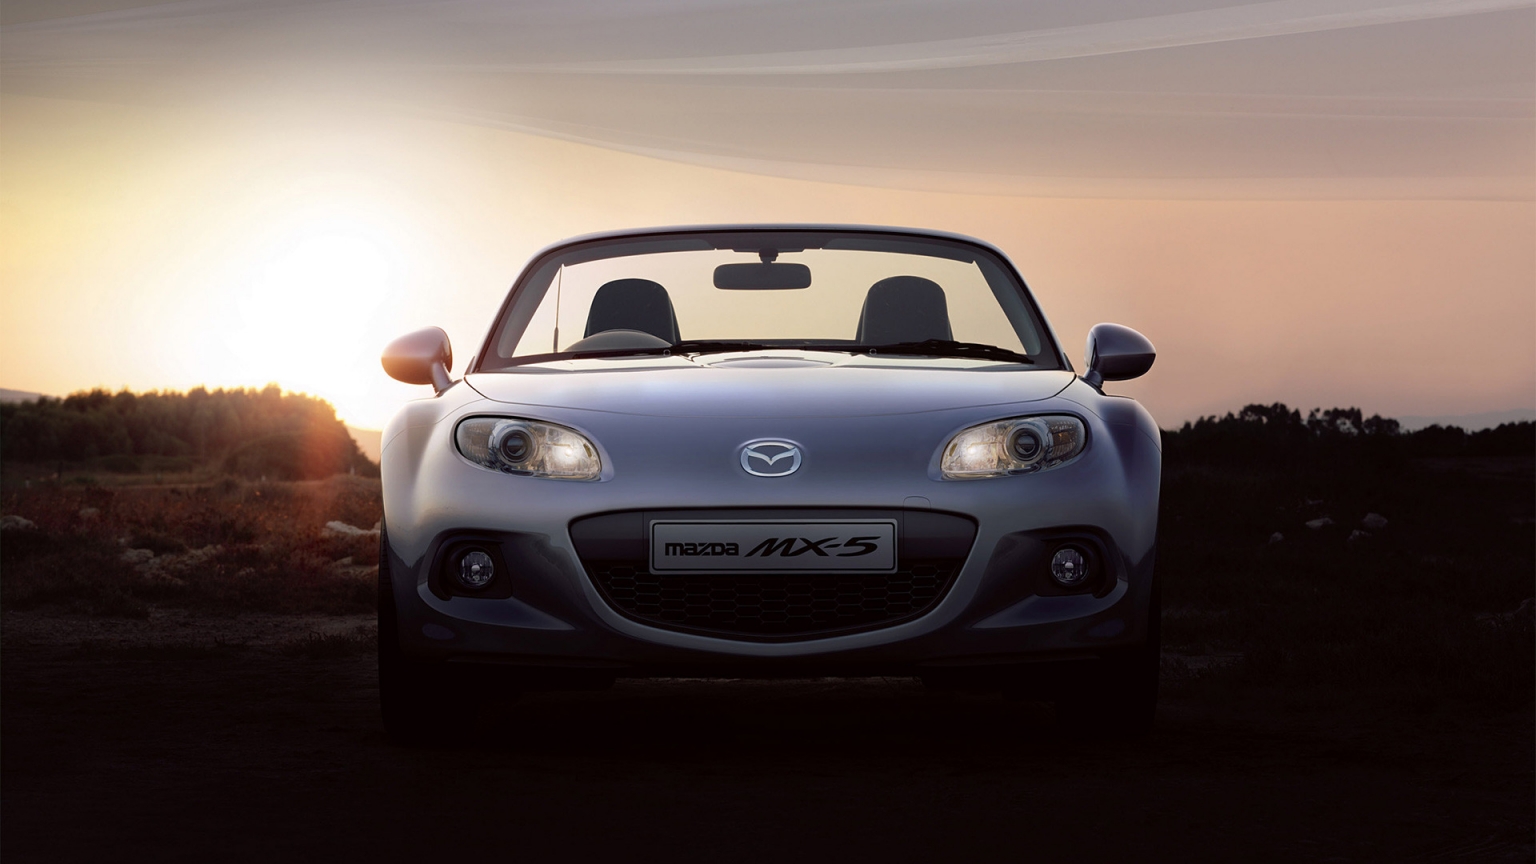 2013 Mazda MX 5 Roadster for 1536 x 864 HDTV resolution